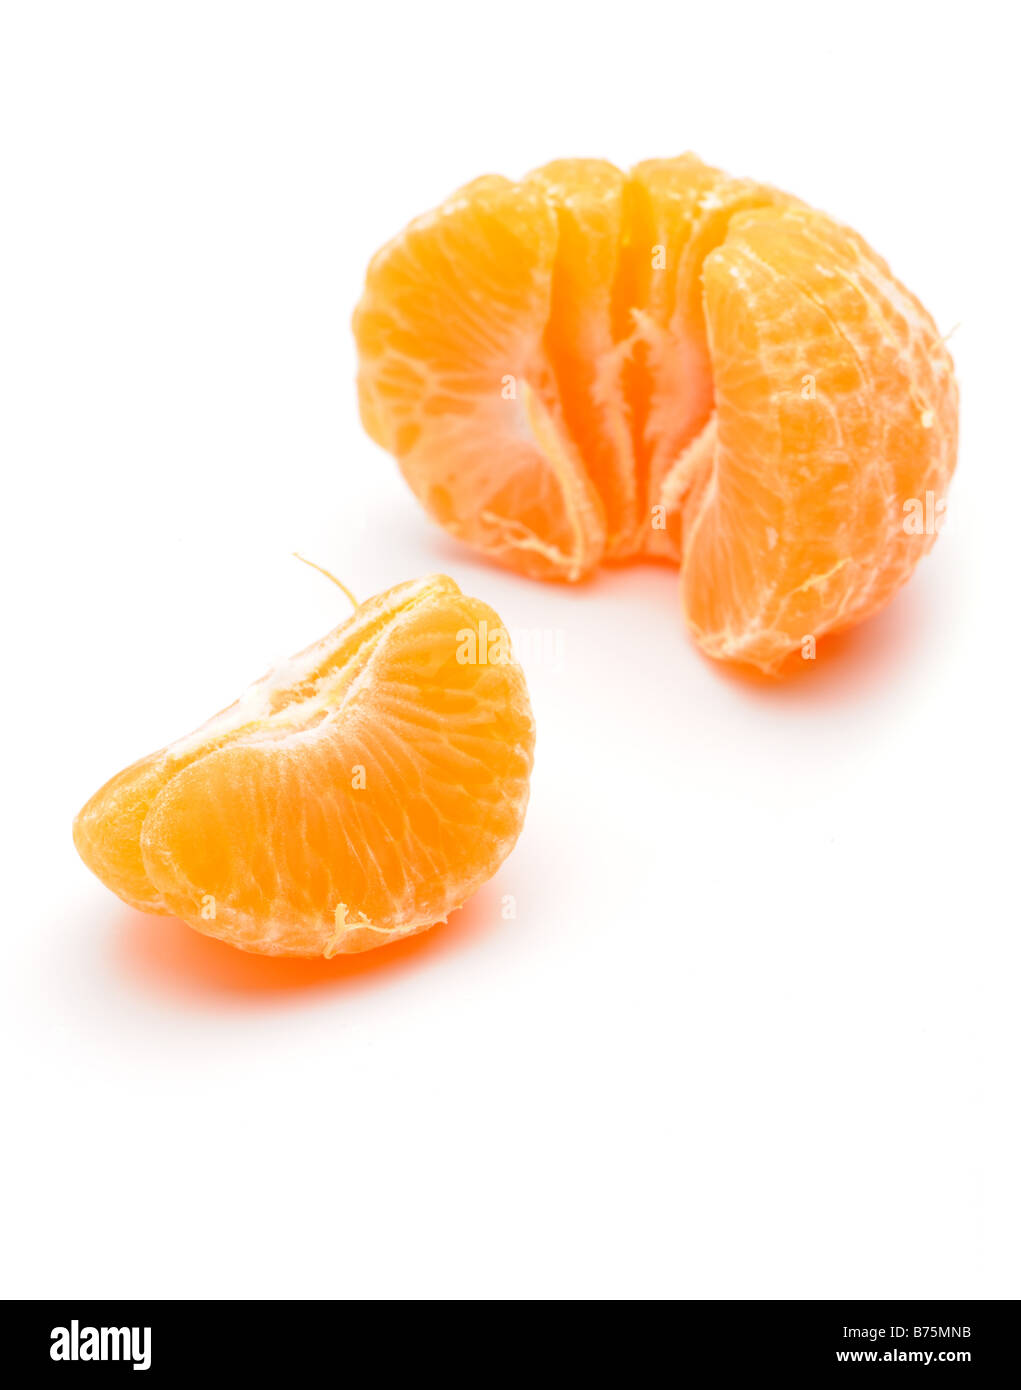 Peeled tangerine on a white background Stock Photo